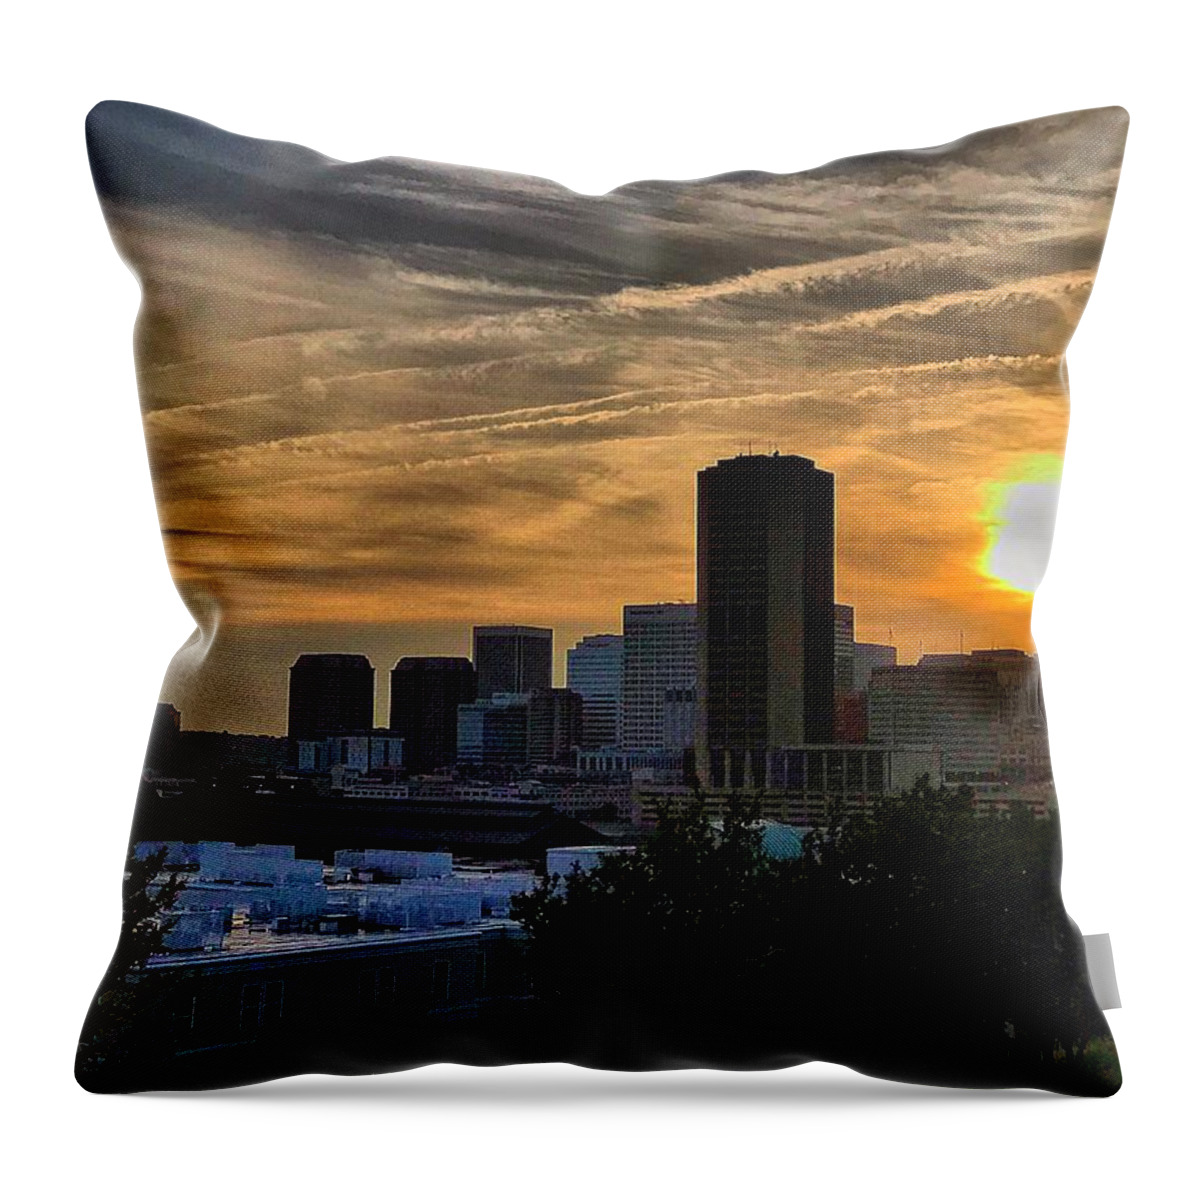  Throw Pillow featuring the photograph Sun setting in Richmond Va by Stephen Dorton